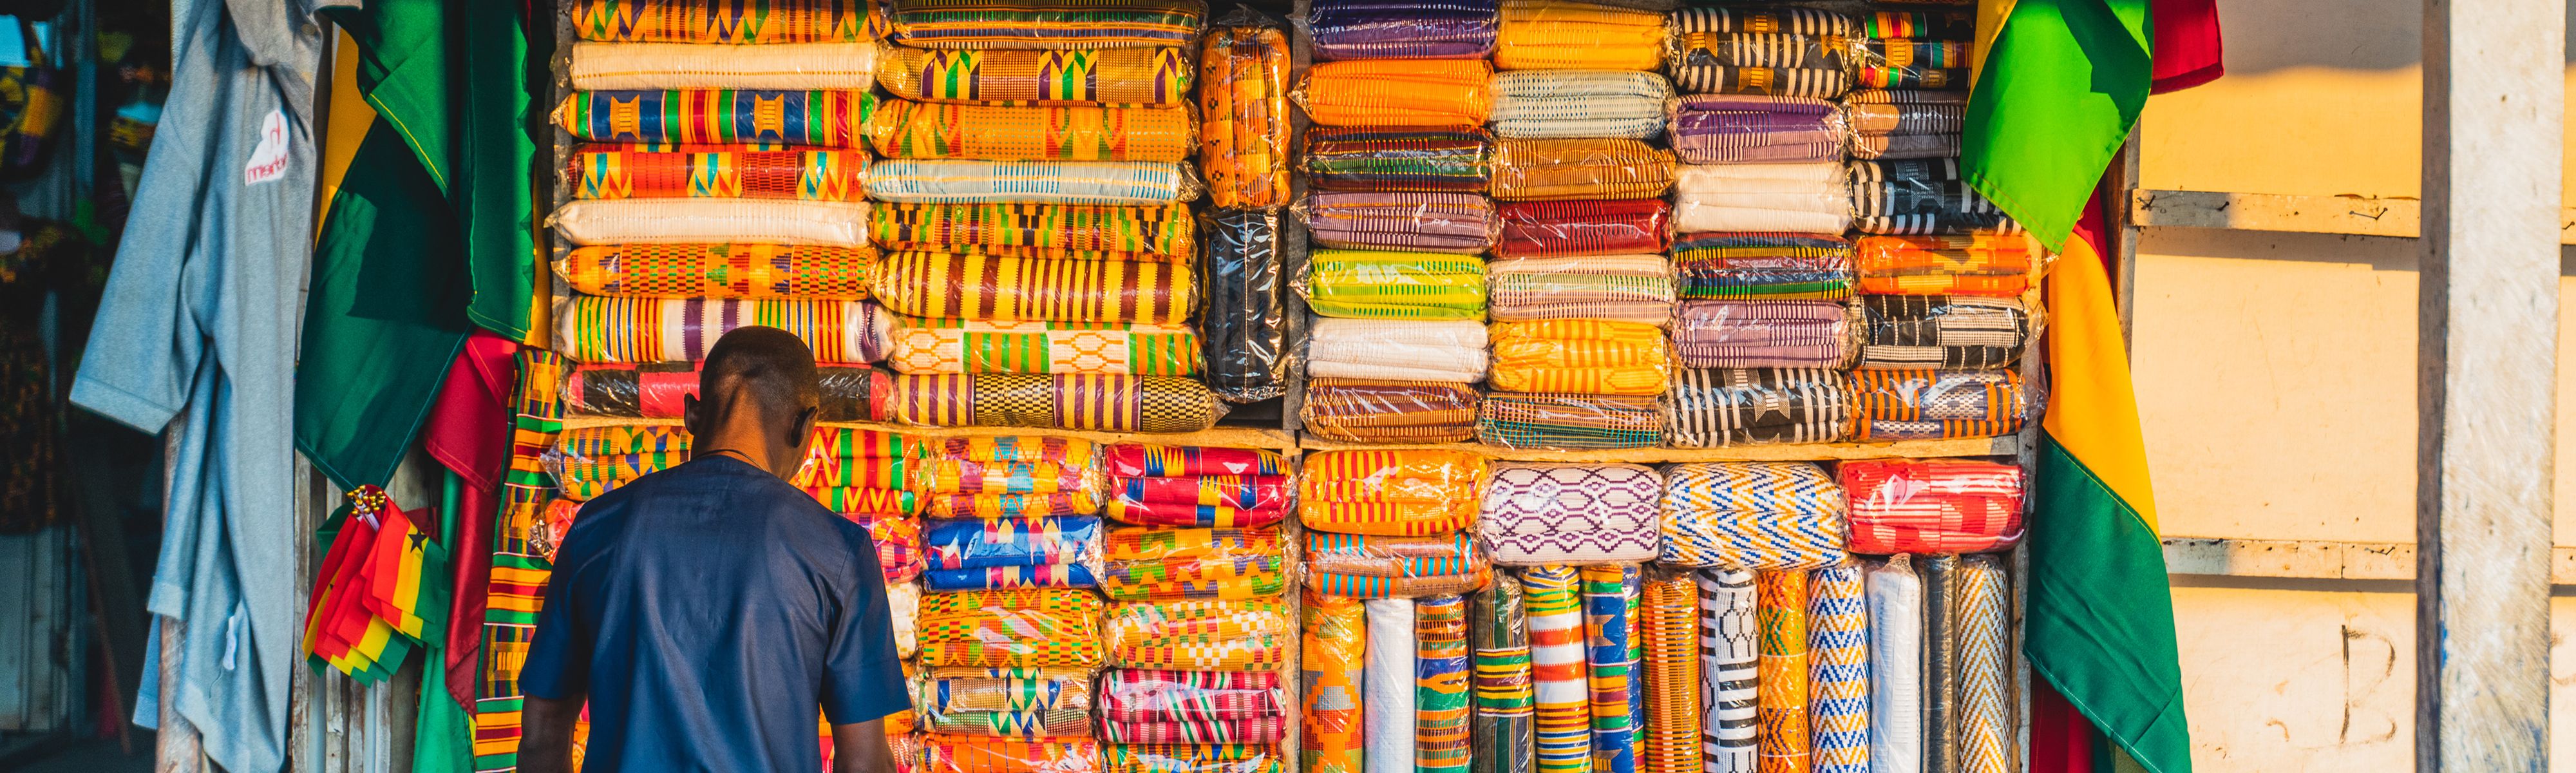 man looking at textiles at a shop in ghana